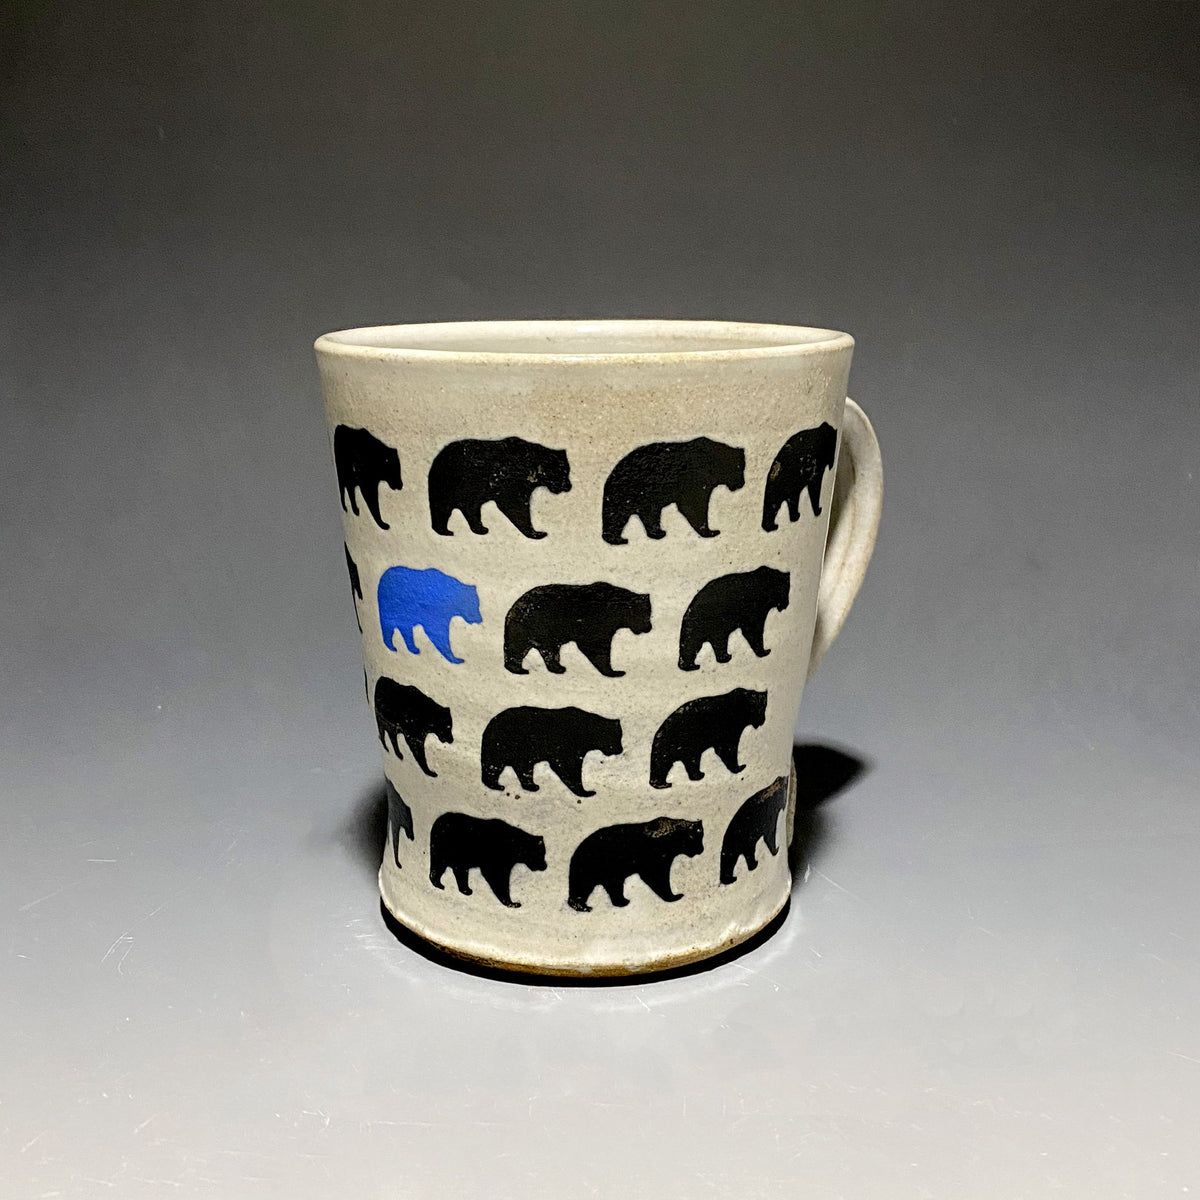 15oz Ceramic Mug featuring repeating black bears and one blue bear